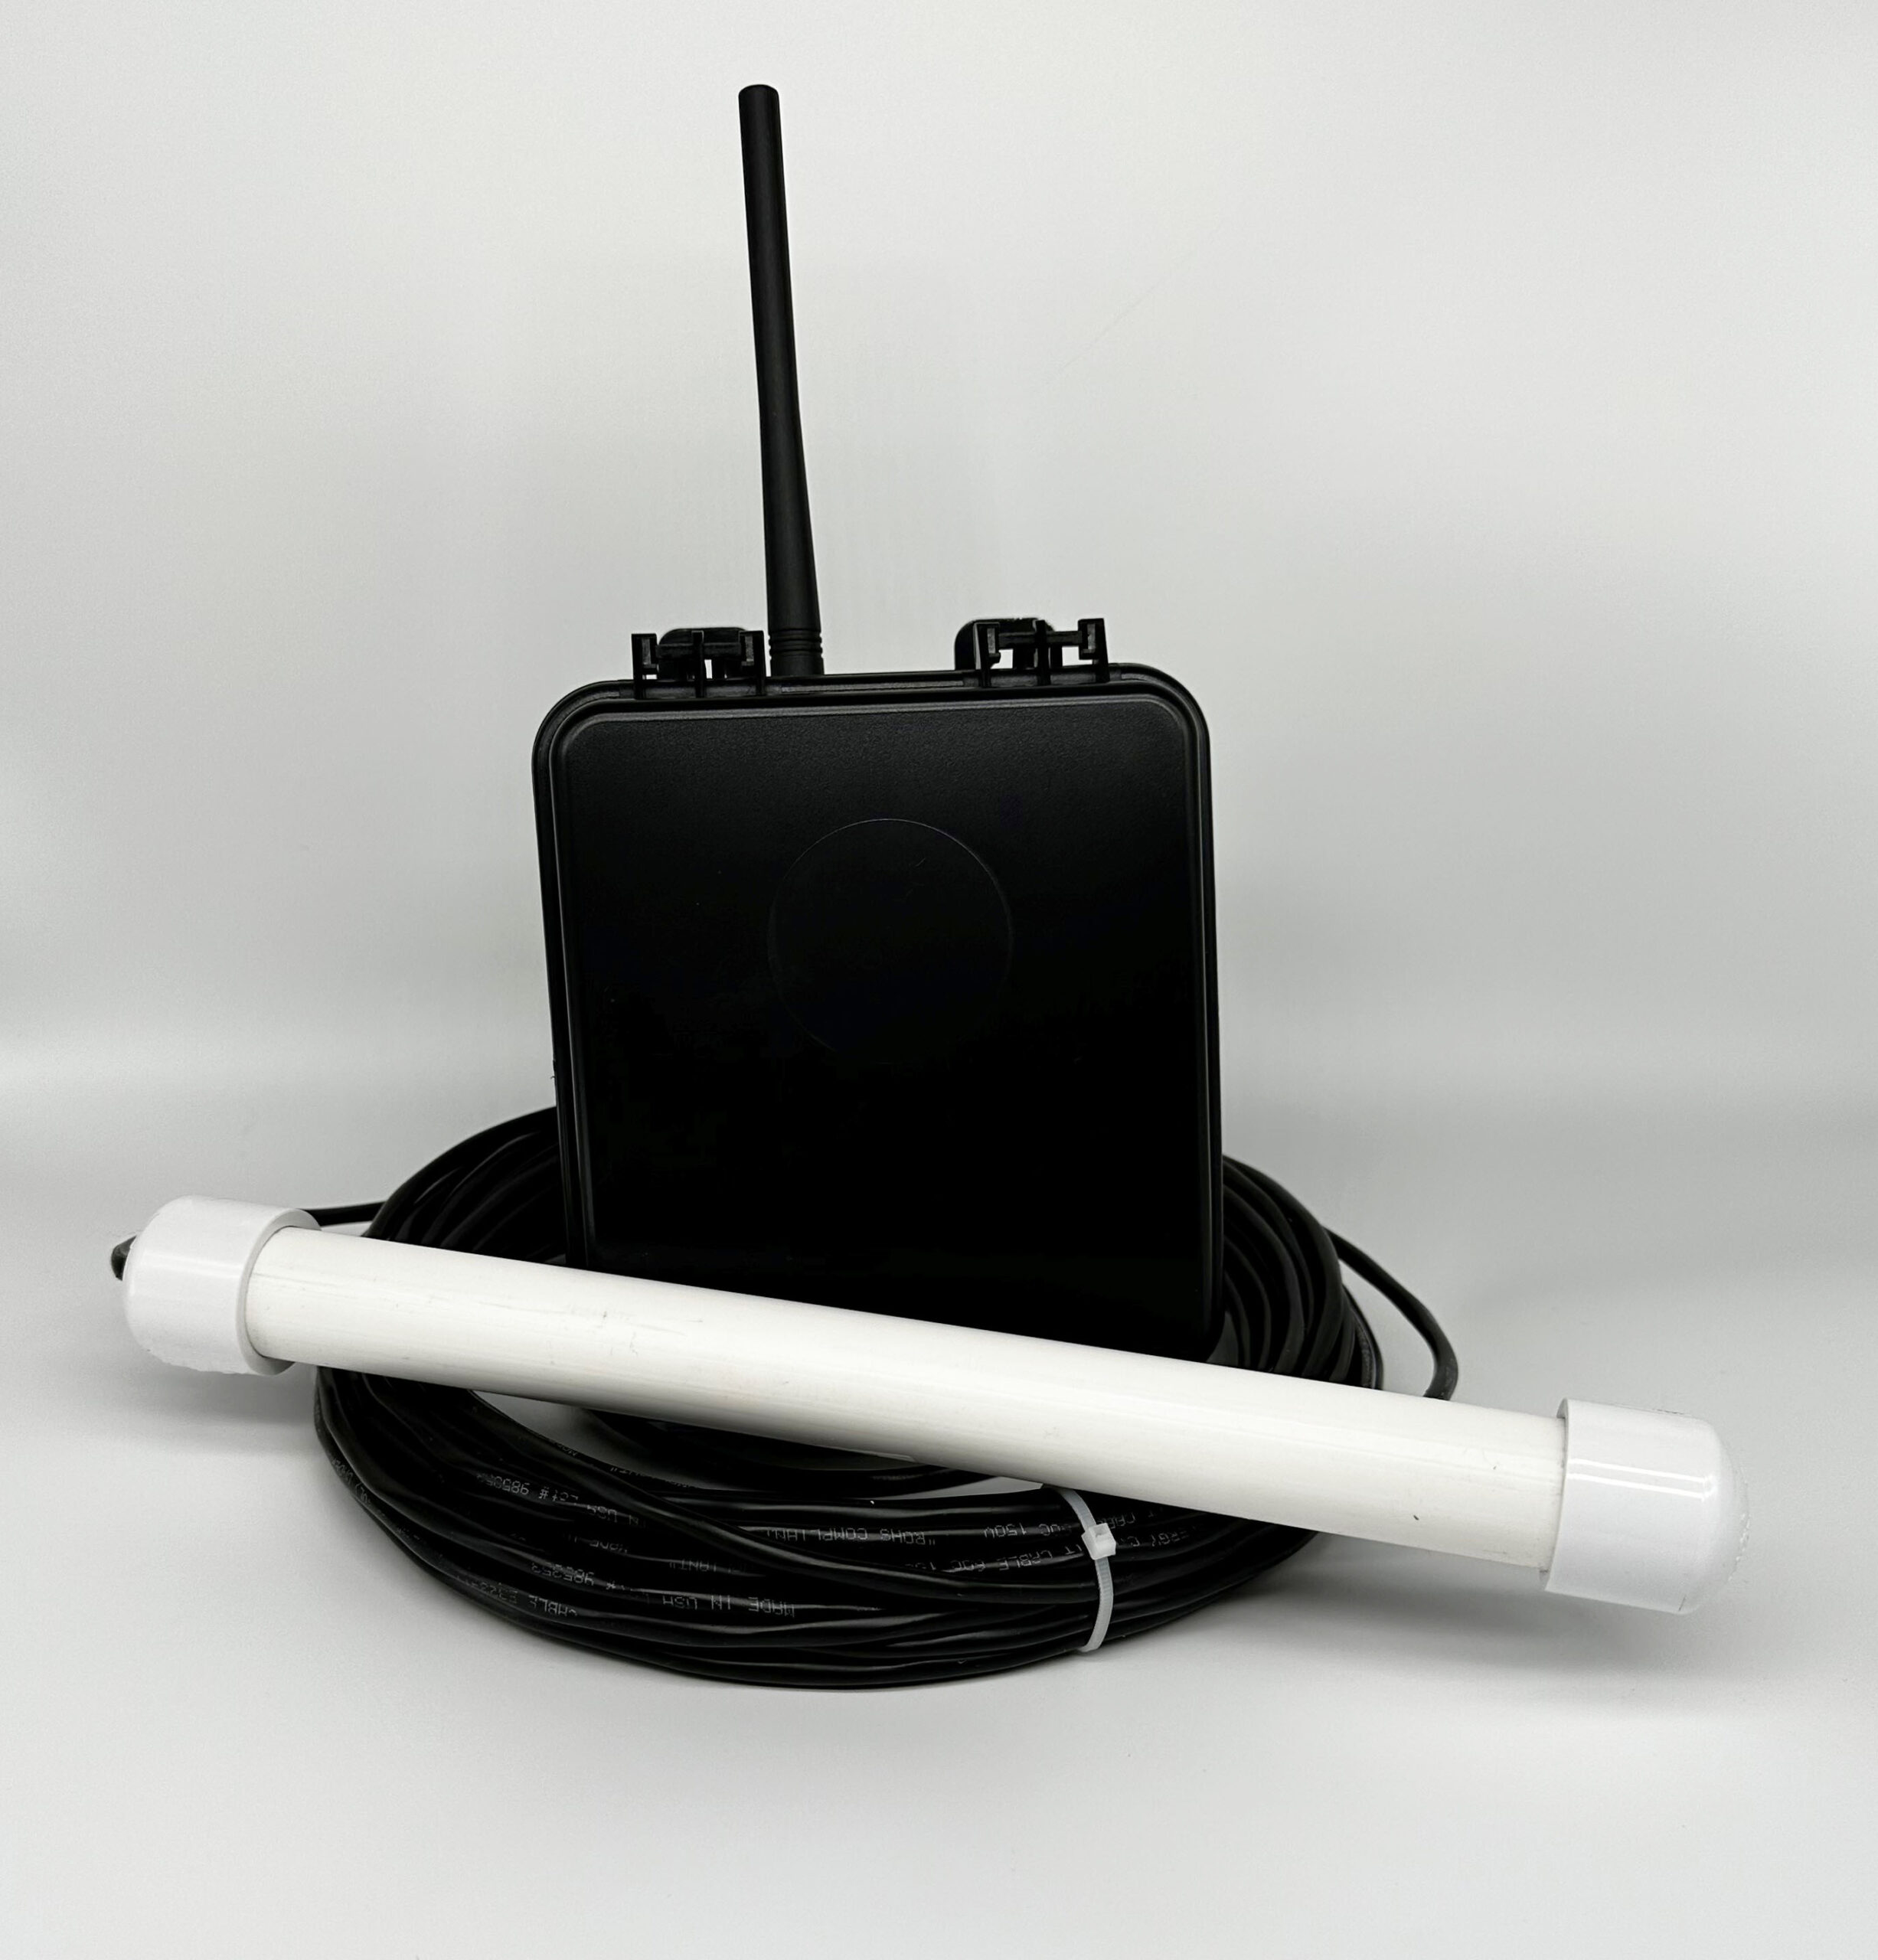 Dakota Alert MURS Wireless Motion Detector, Black (M538-HT) - 1